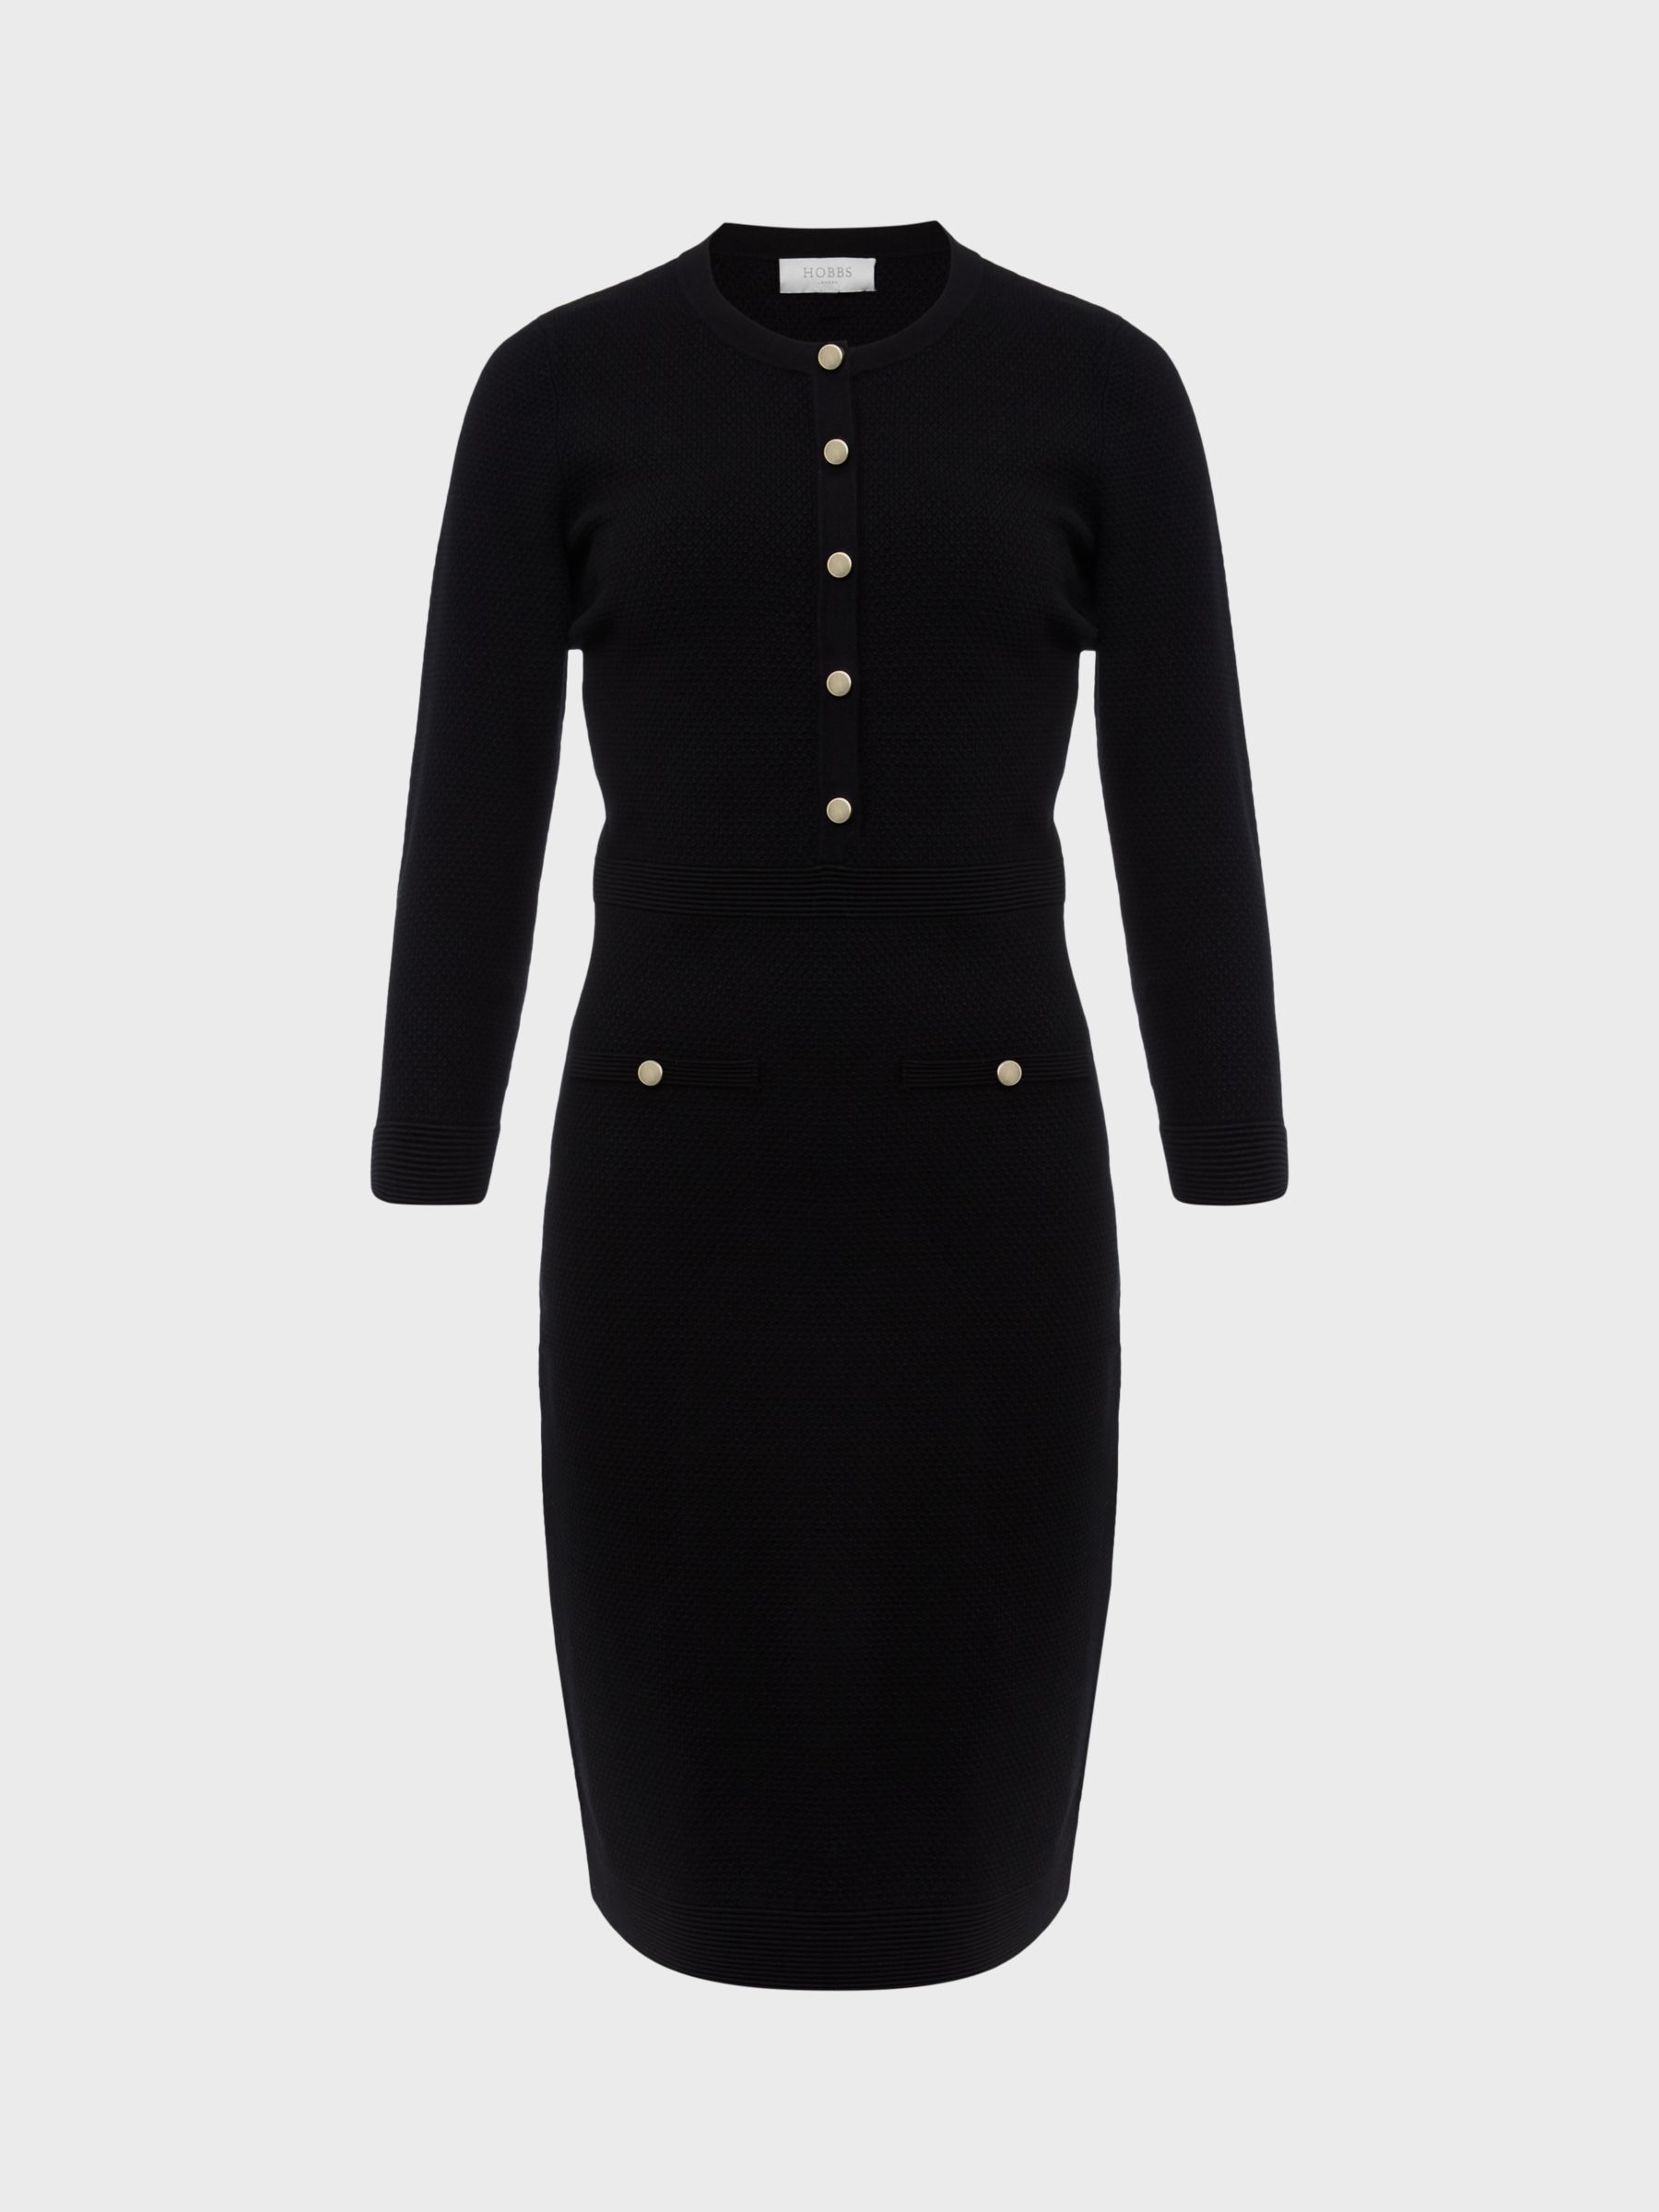 Hobbs Noa Button Detail Knitted Dress, Black at John Lewis & Partners